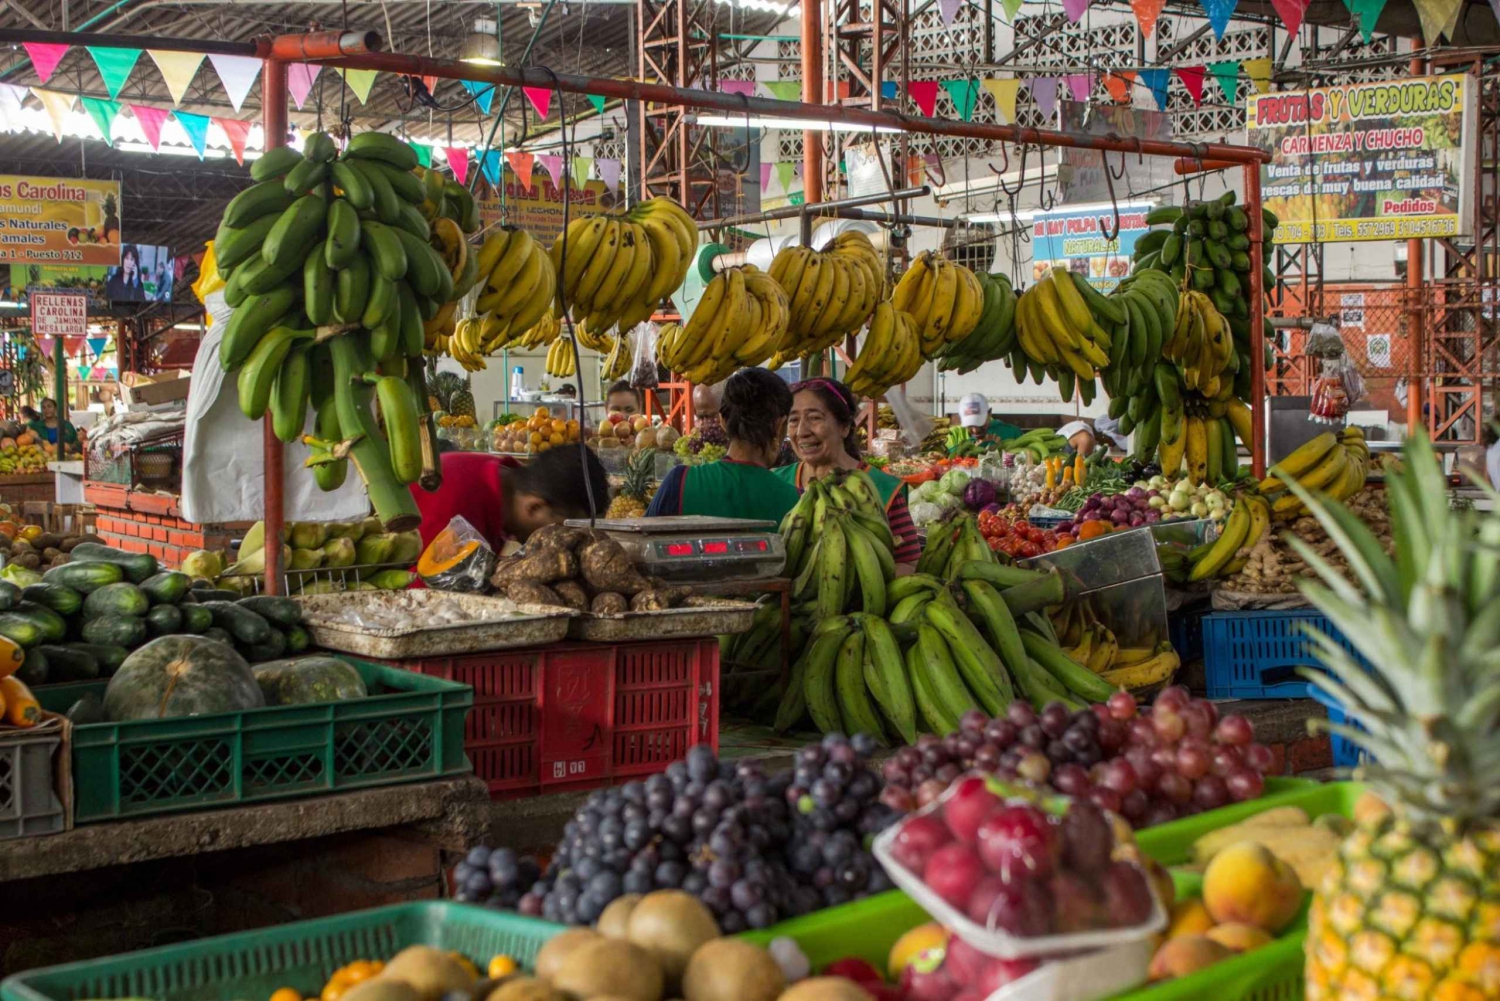 Cali: Fruit Market Walking Tour with Tastings